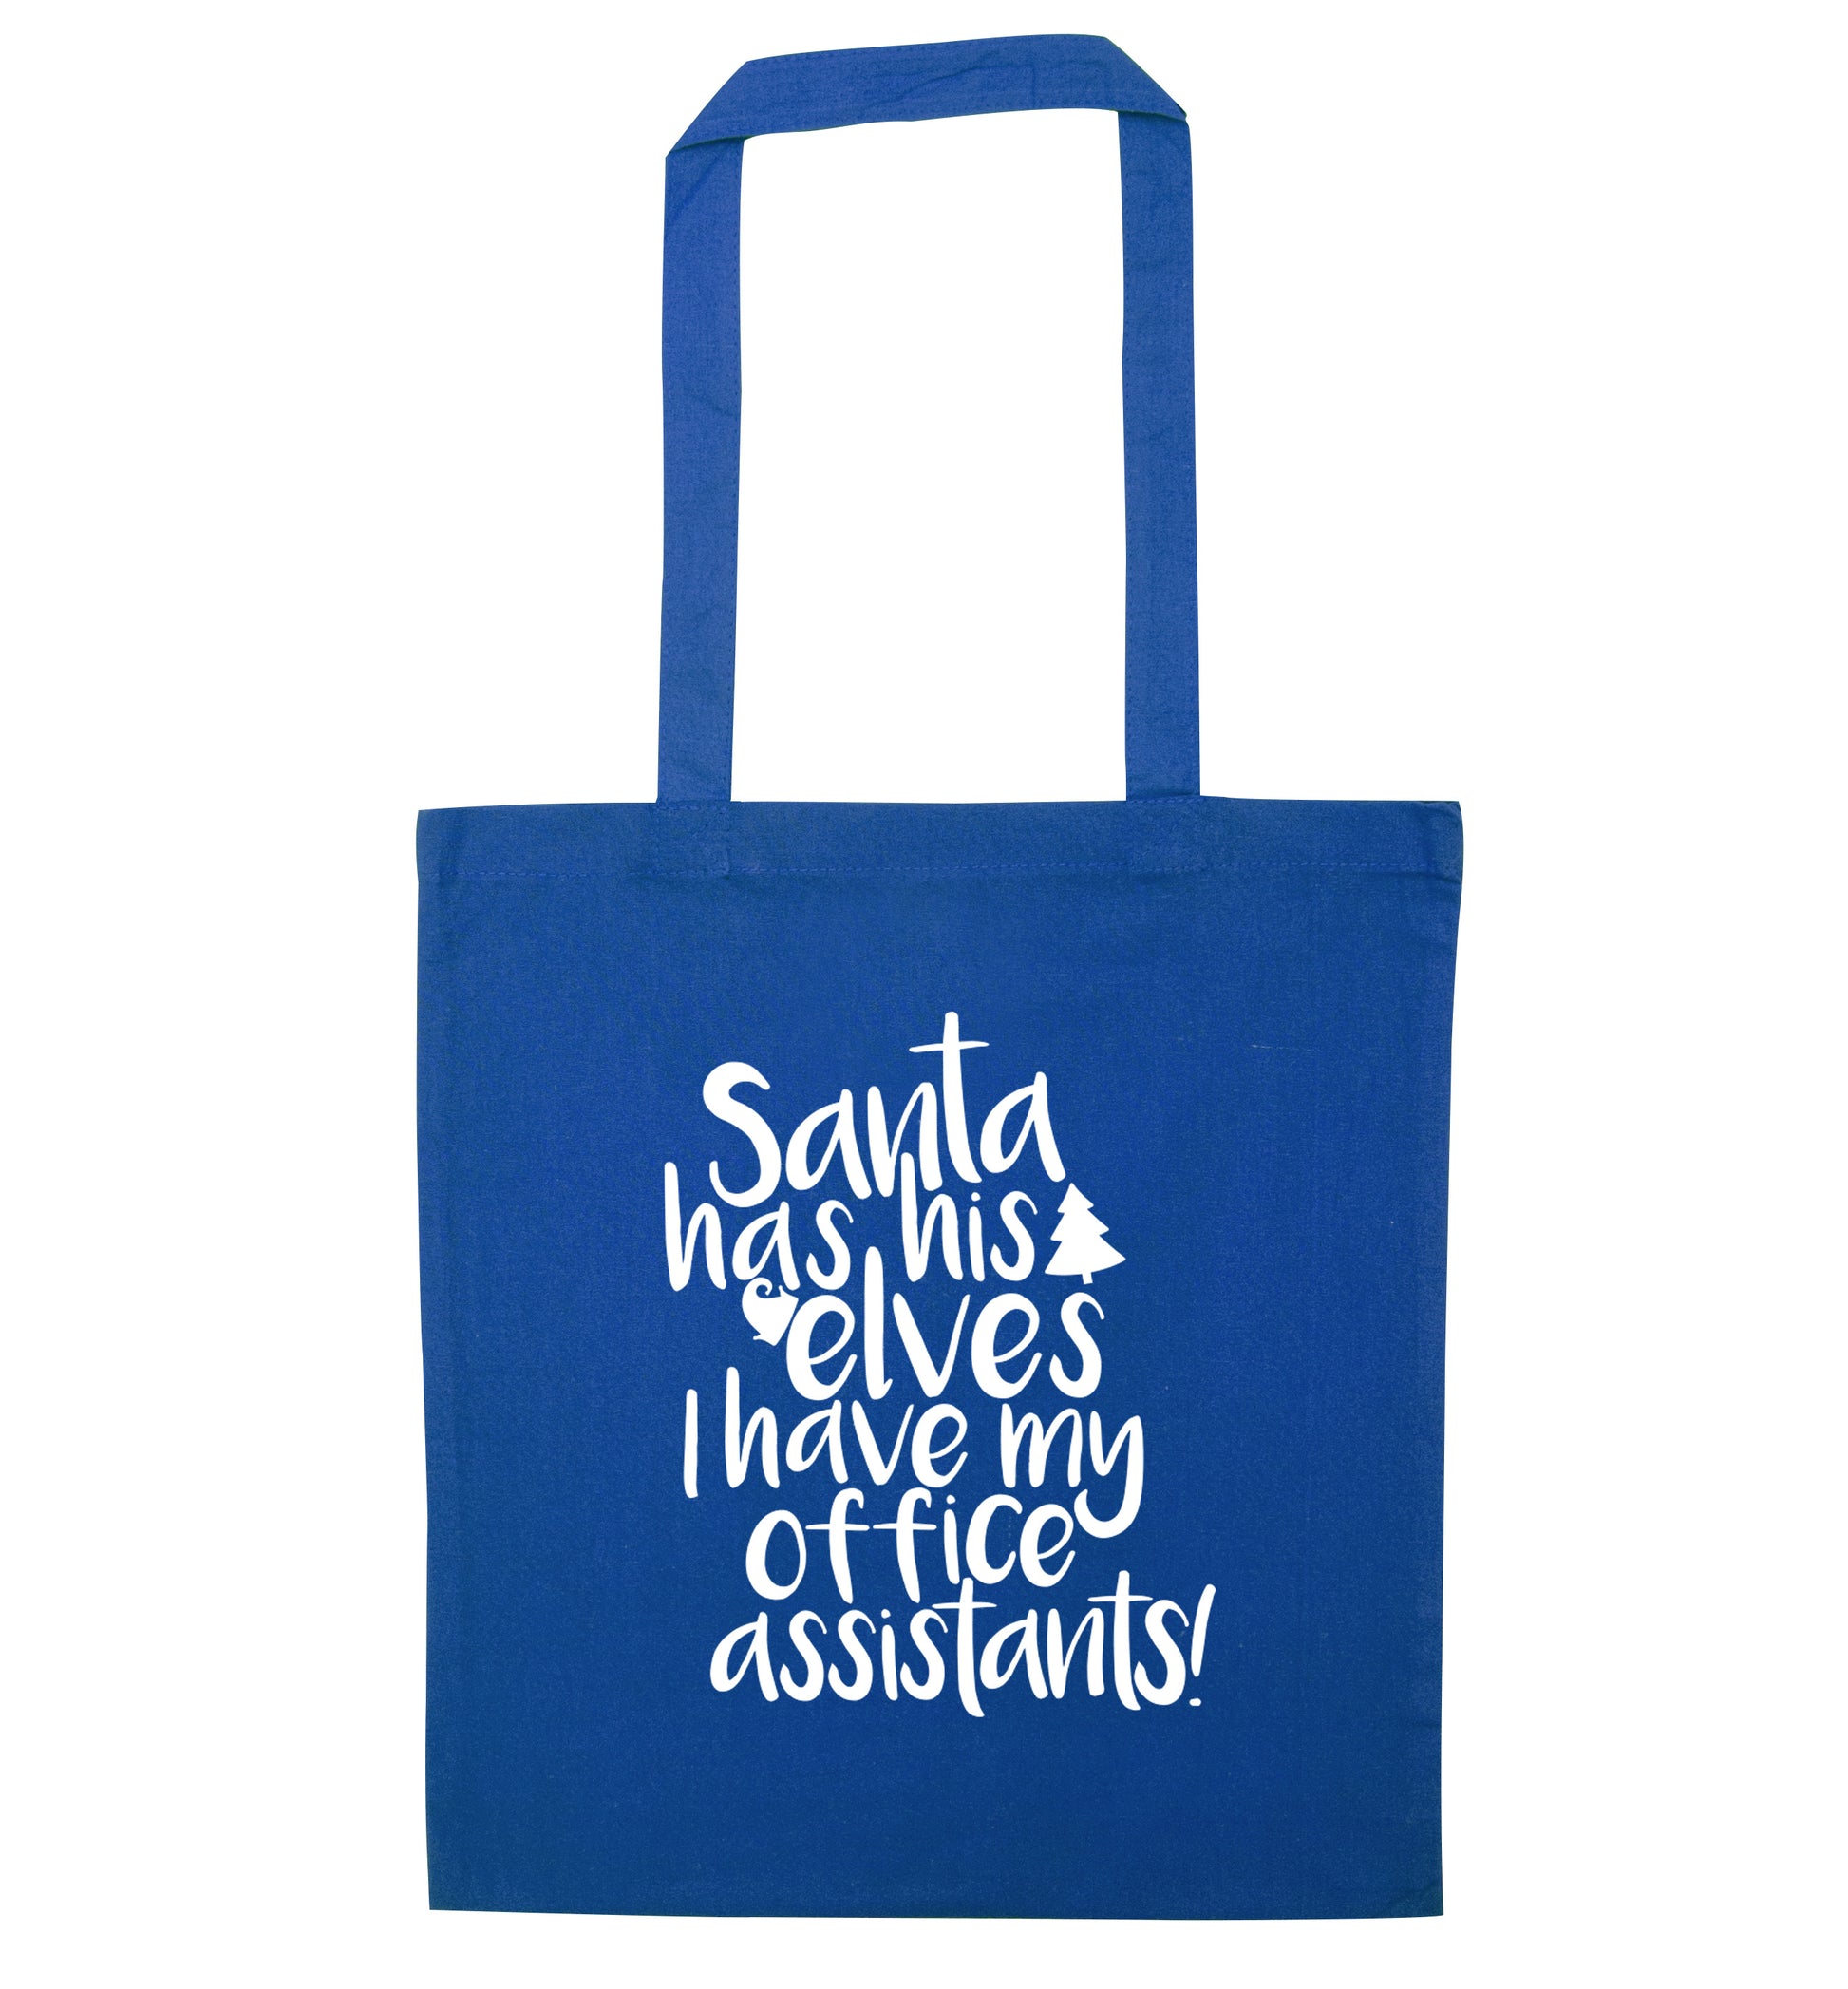 Santa has elves I have office assistants blue tote bag